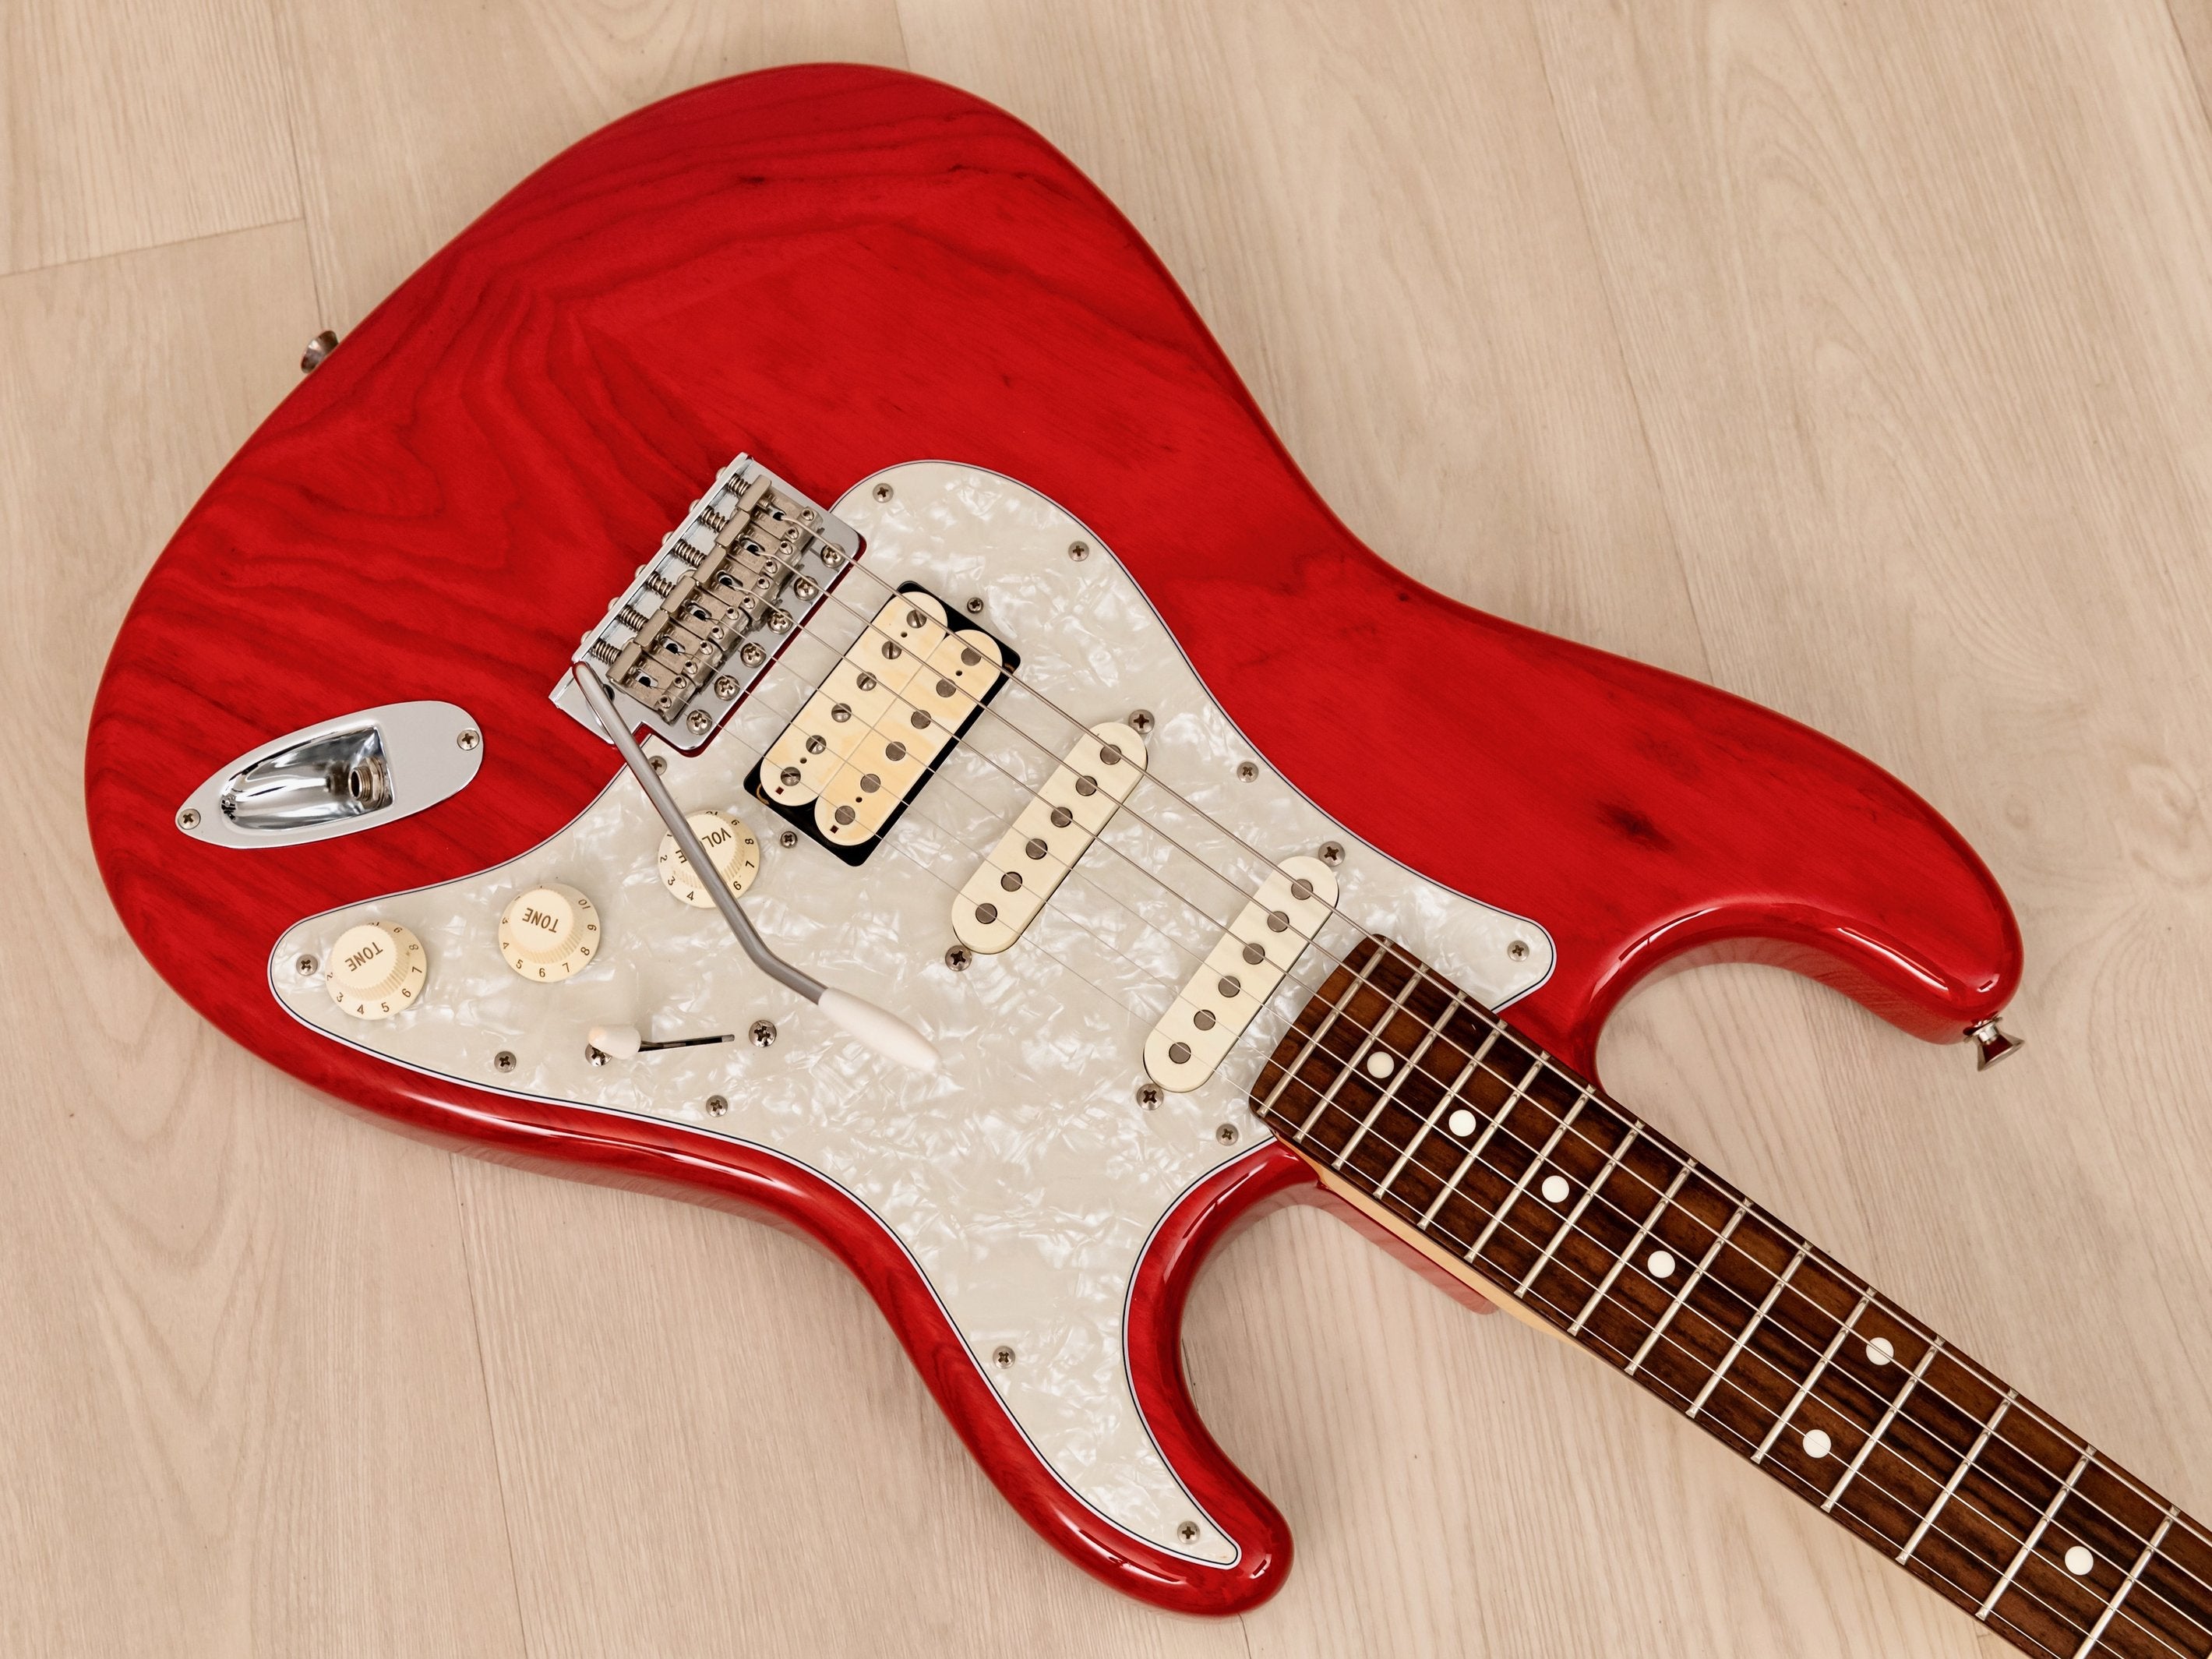 2012 Fender Stratocaster ST62-ASH MH Trans Red SSH w/ Hangtags, Japan MIJ